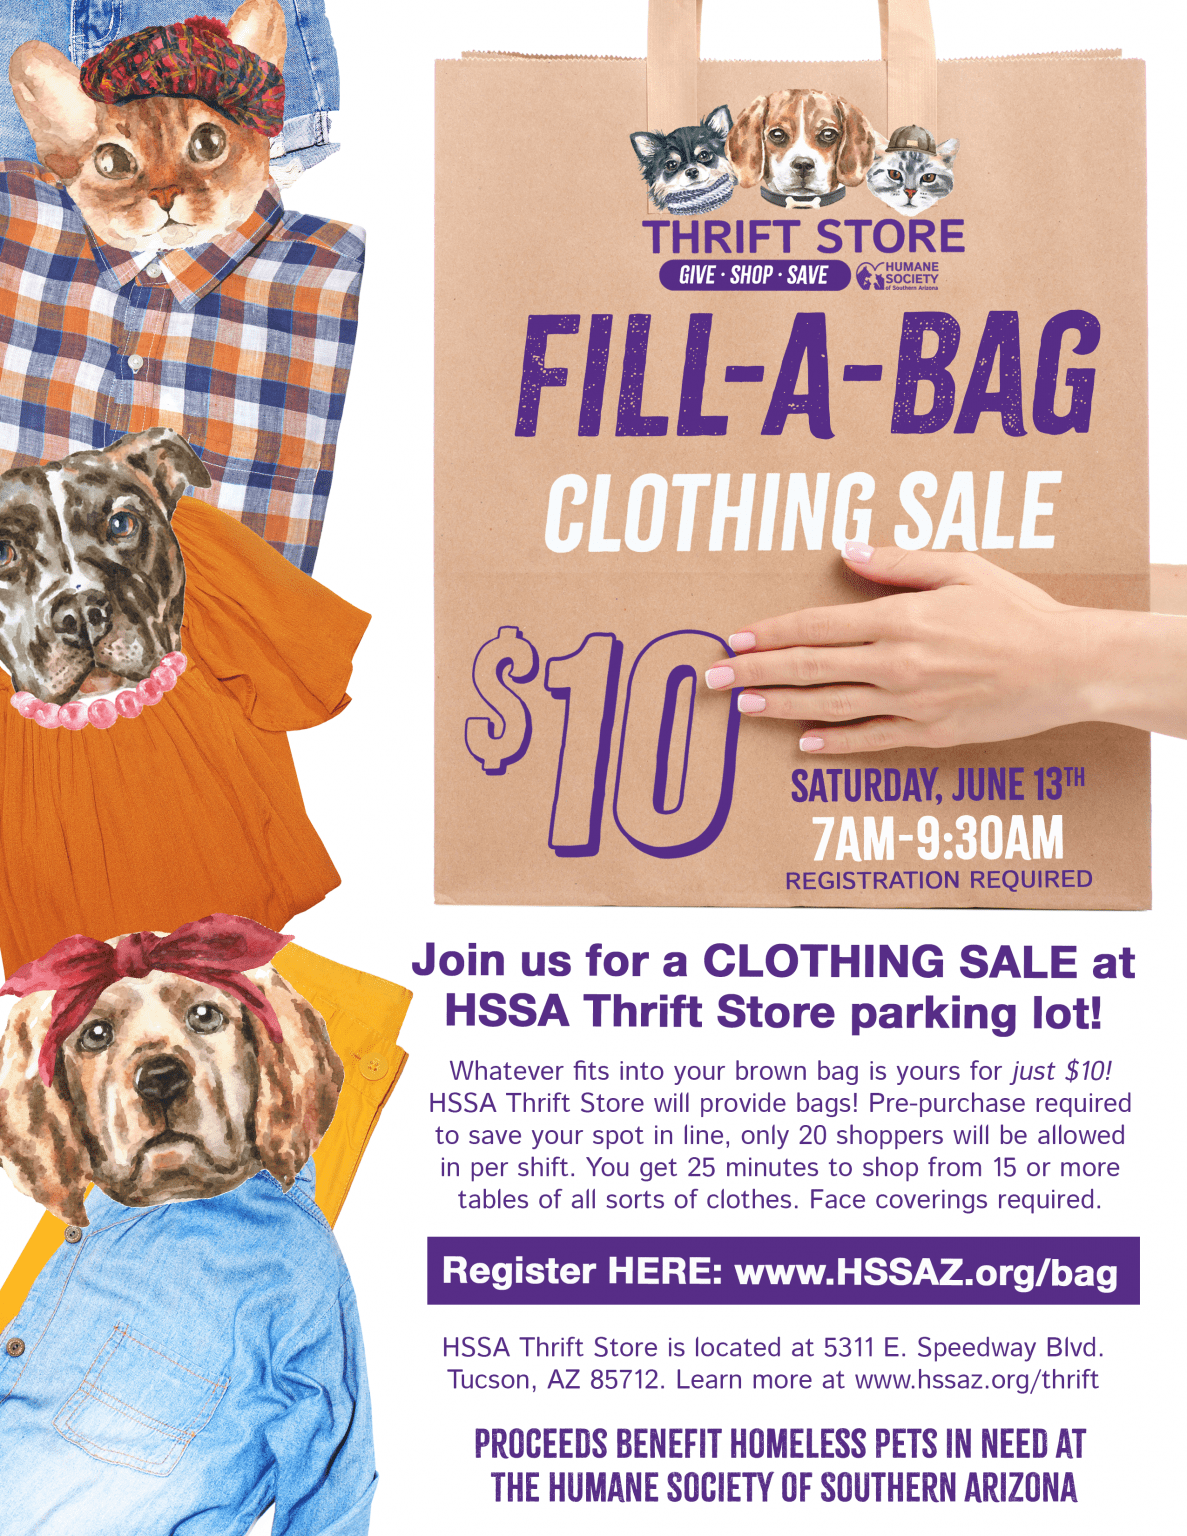 HSSA Thrift Store FILLABAG Clothing Sale